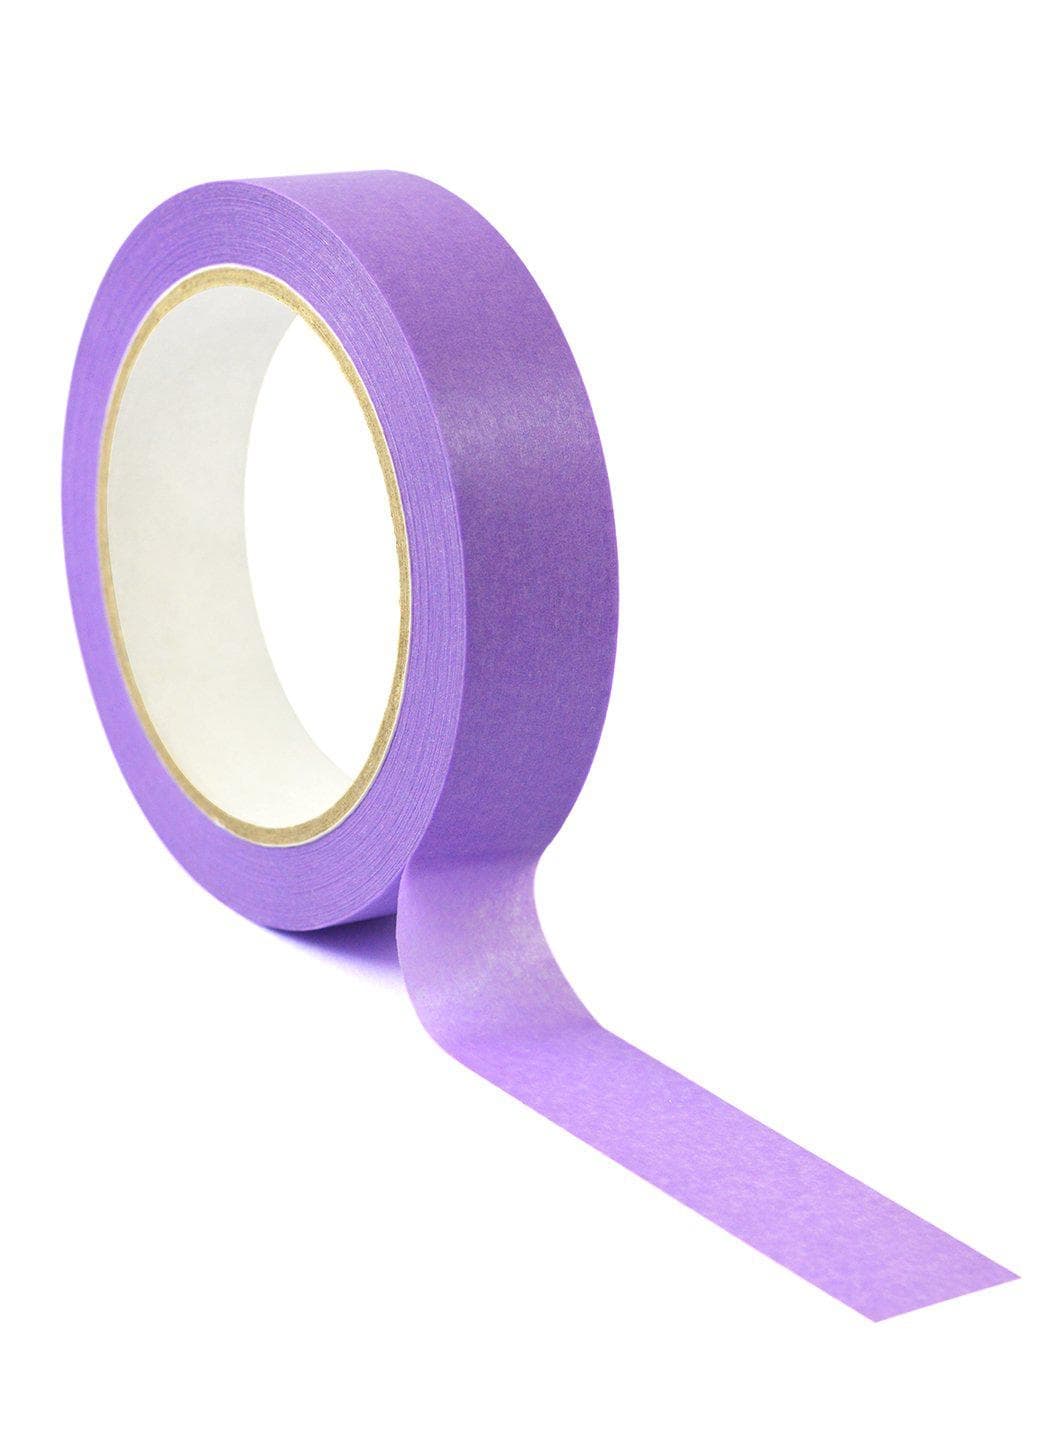 Van Loenhout Products B.V. Adhesives Satin Masking Tape